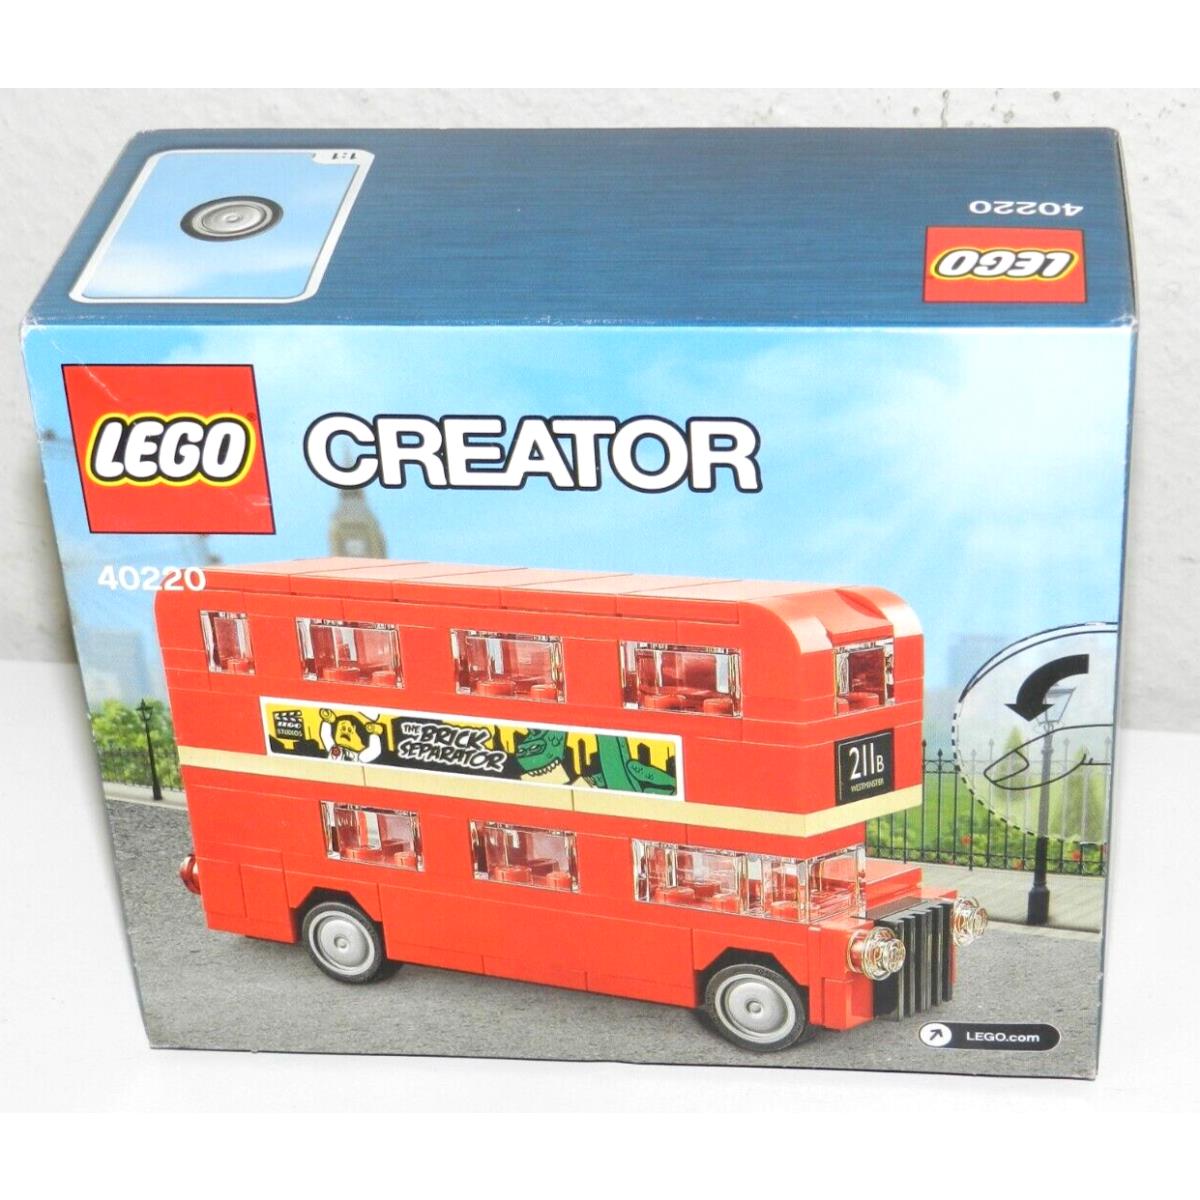 Lego Creator London Bus Set Retired 40220